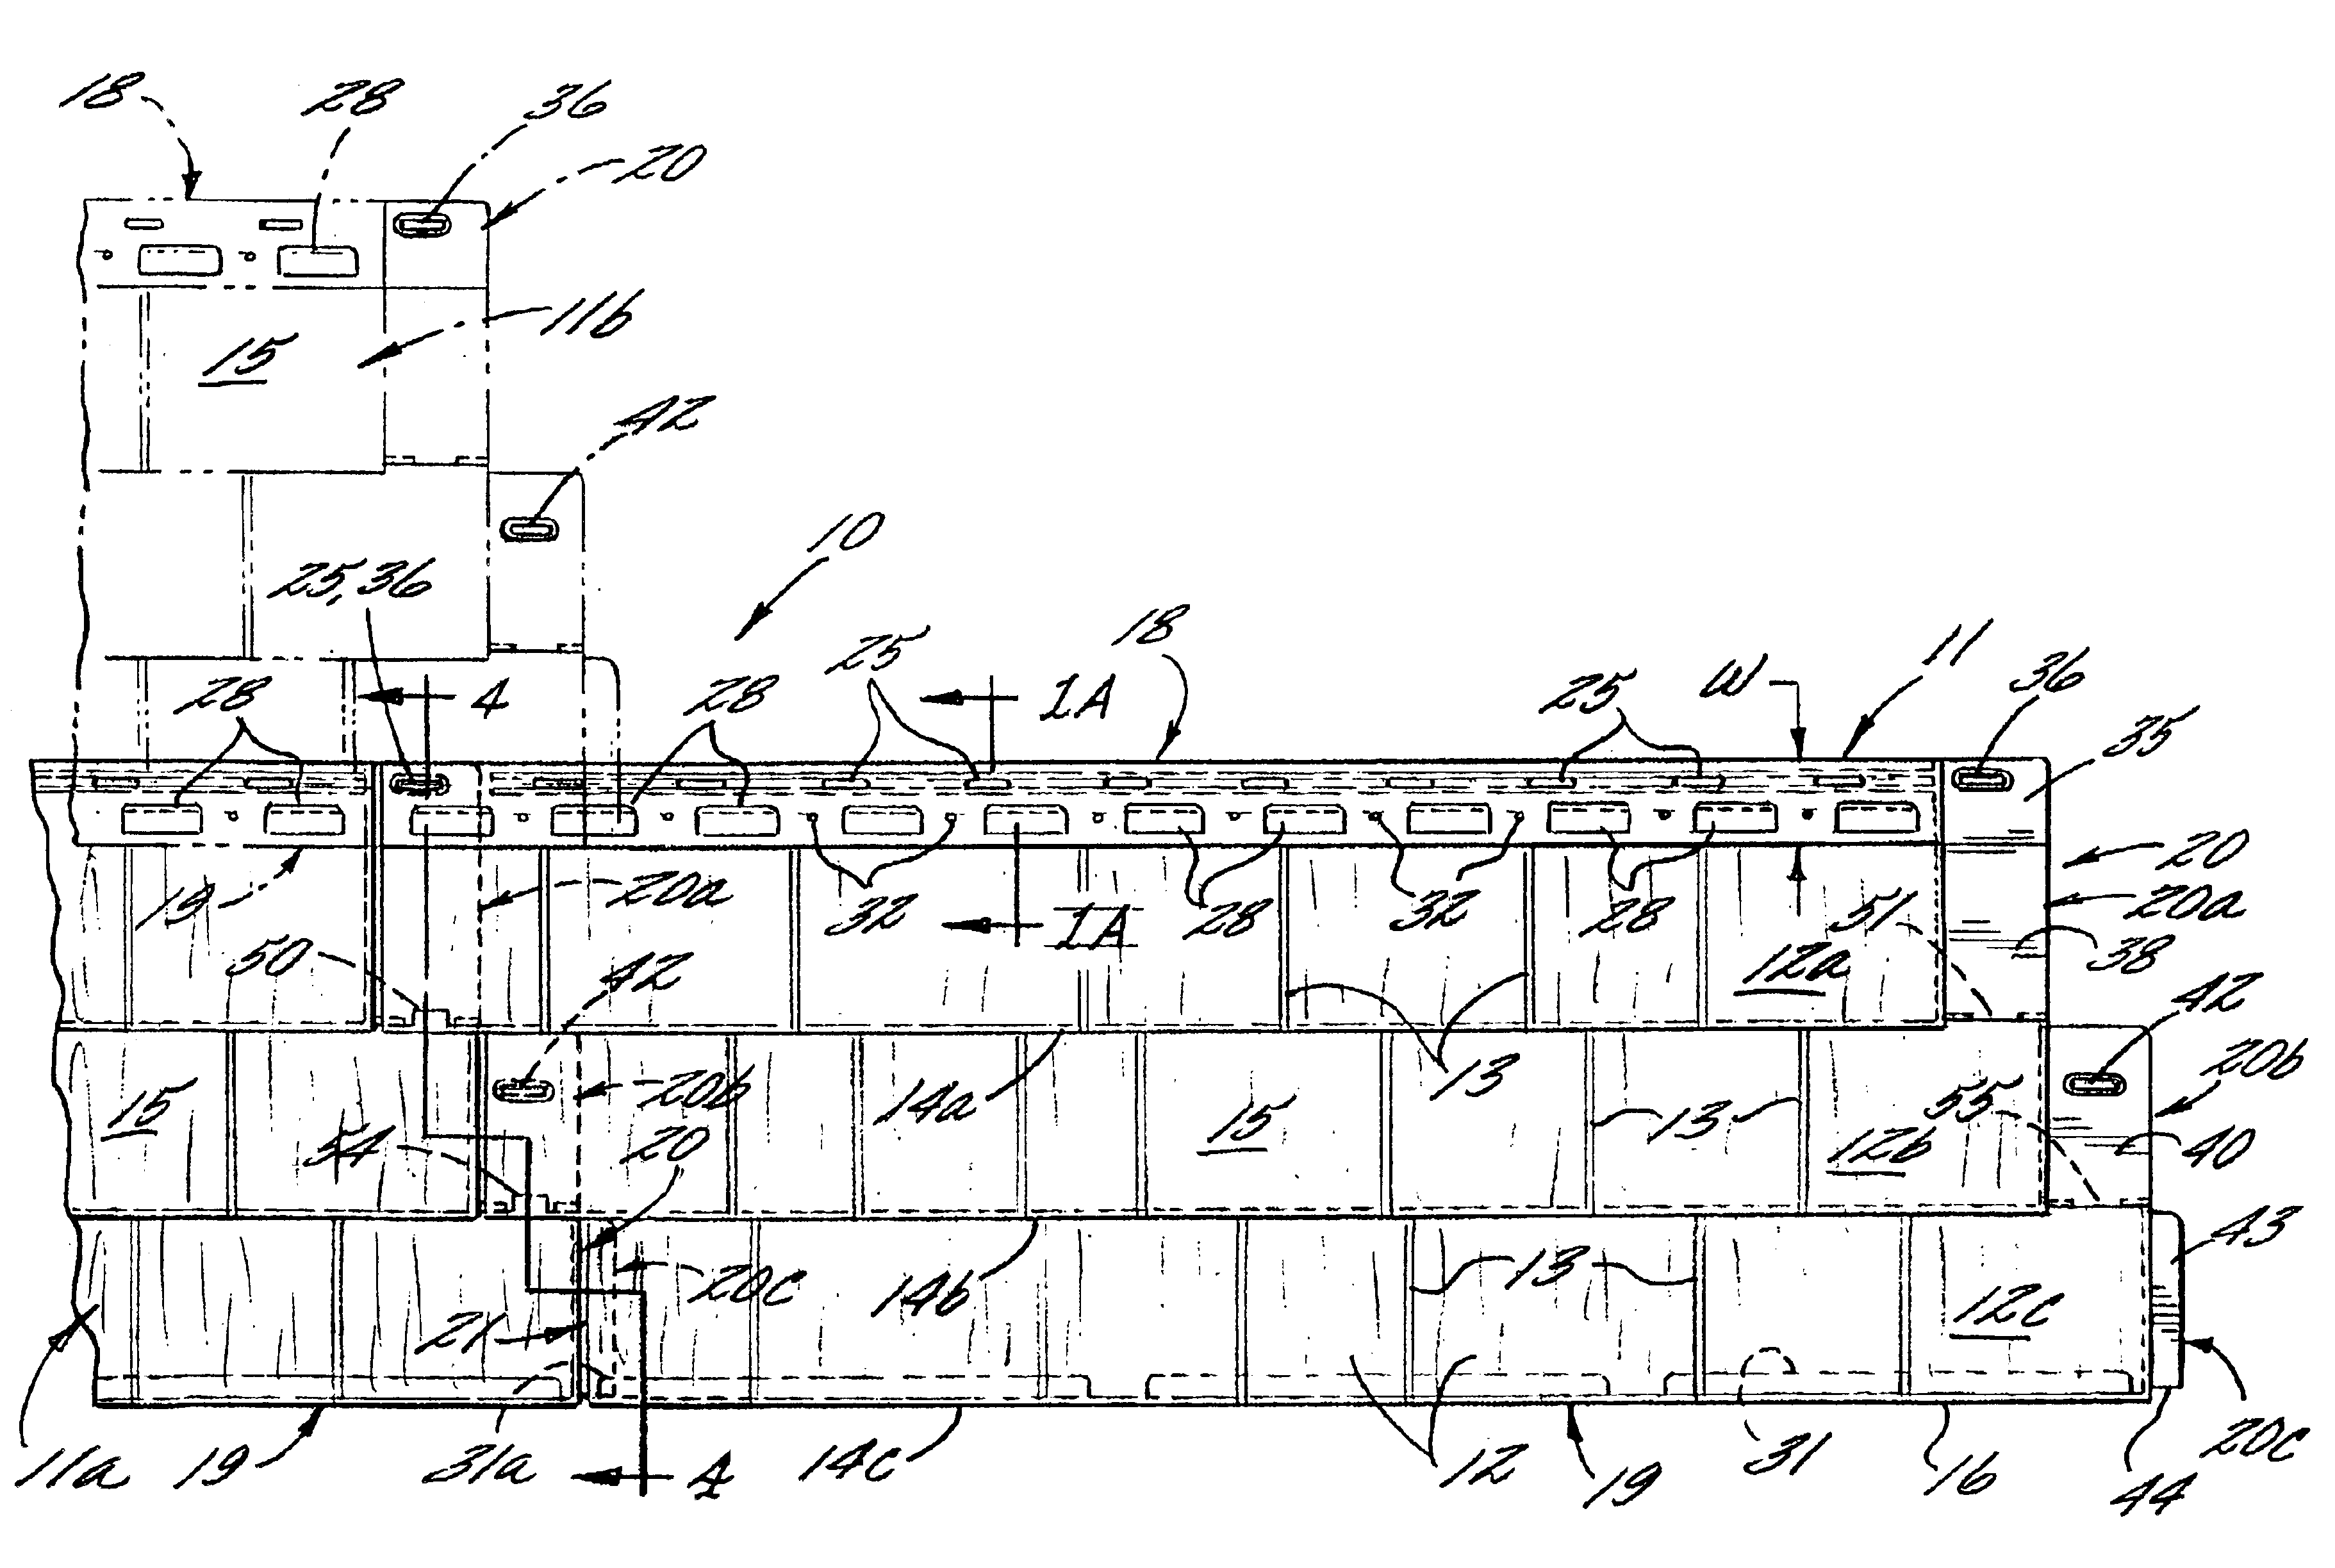 Decorative wall covering with upward movement panel interlock system